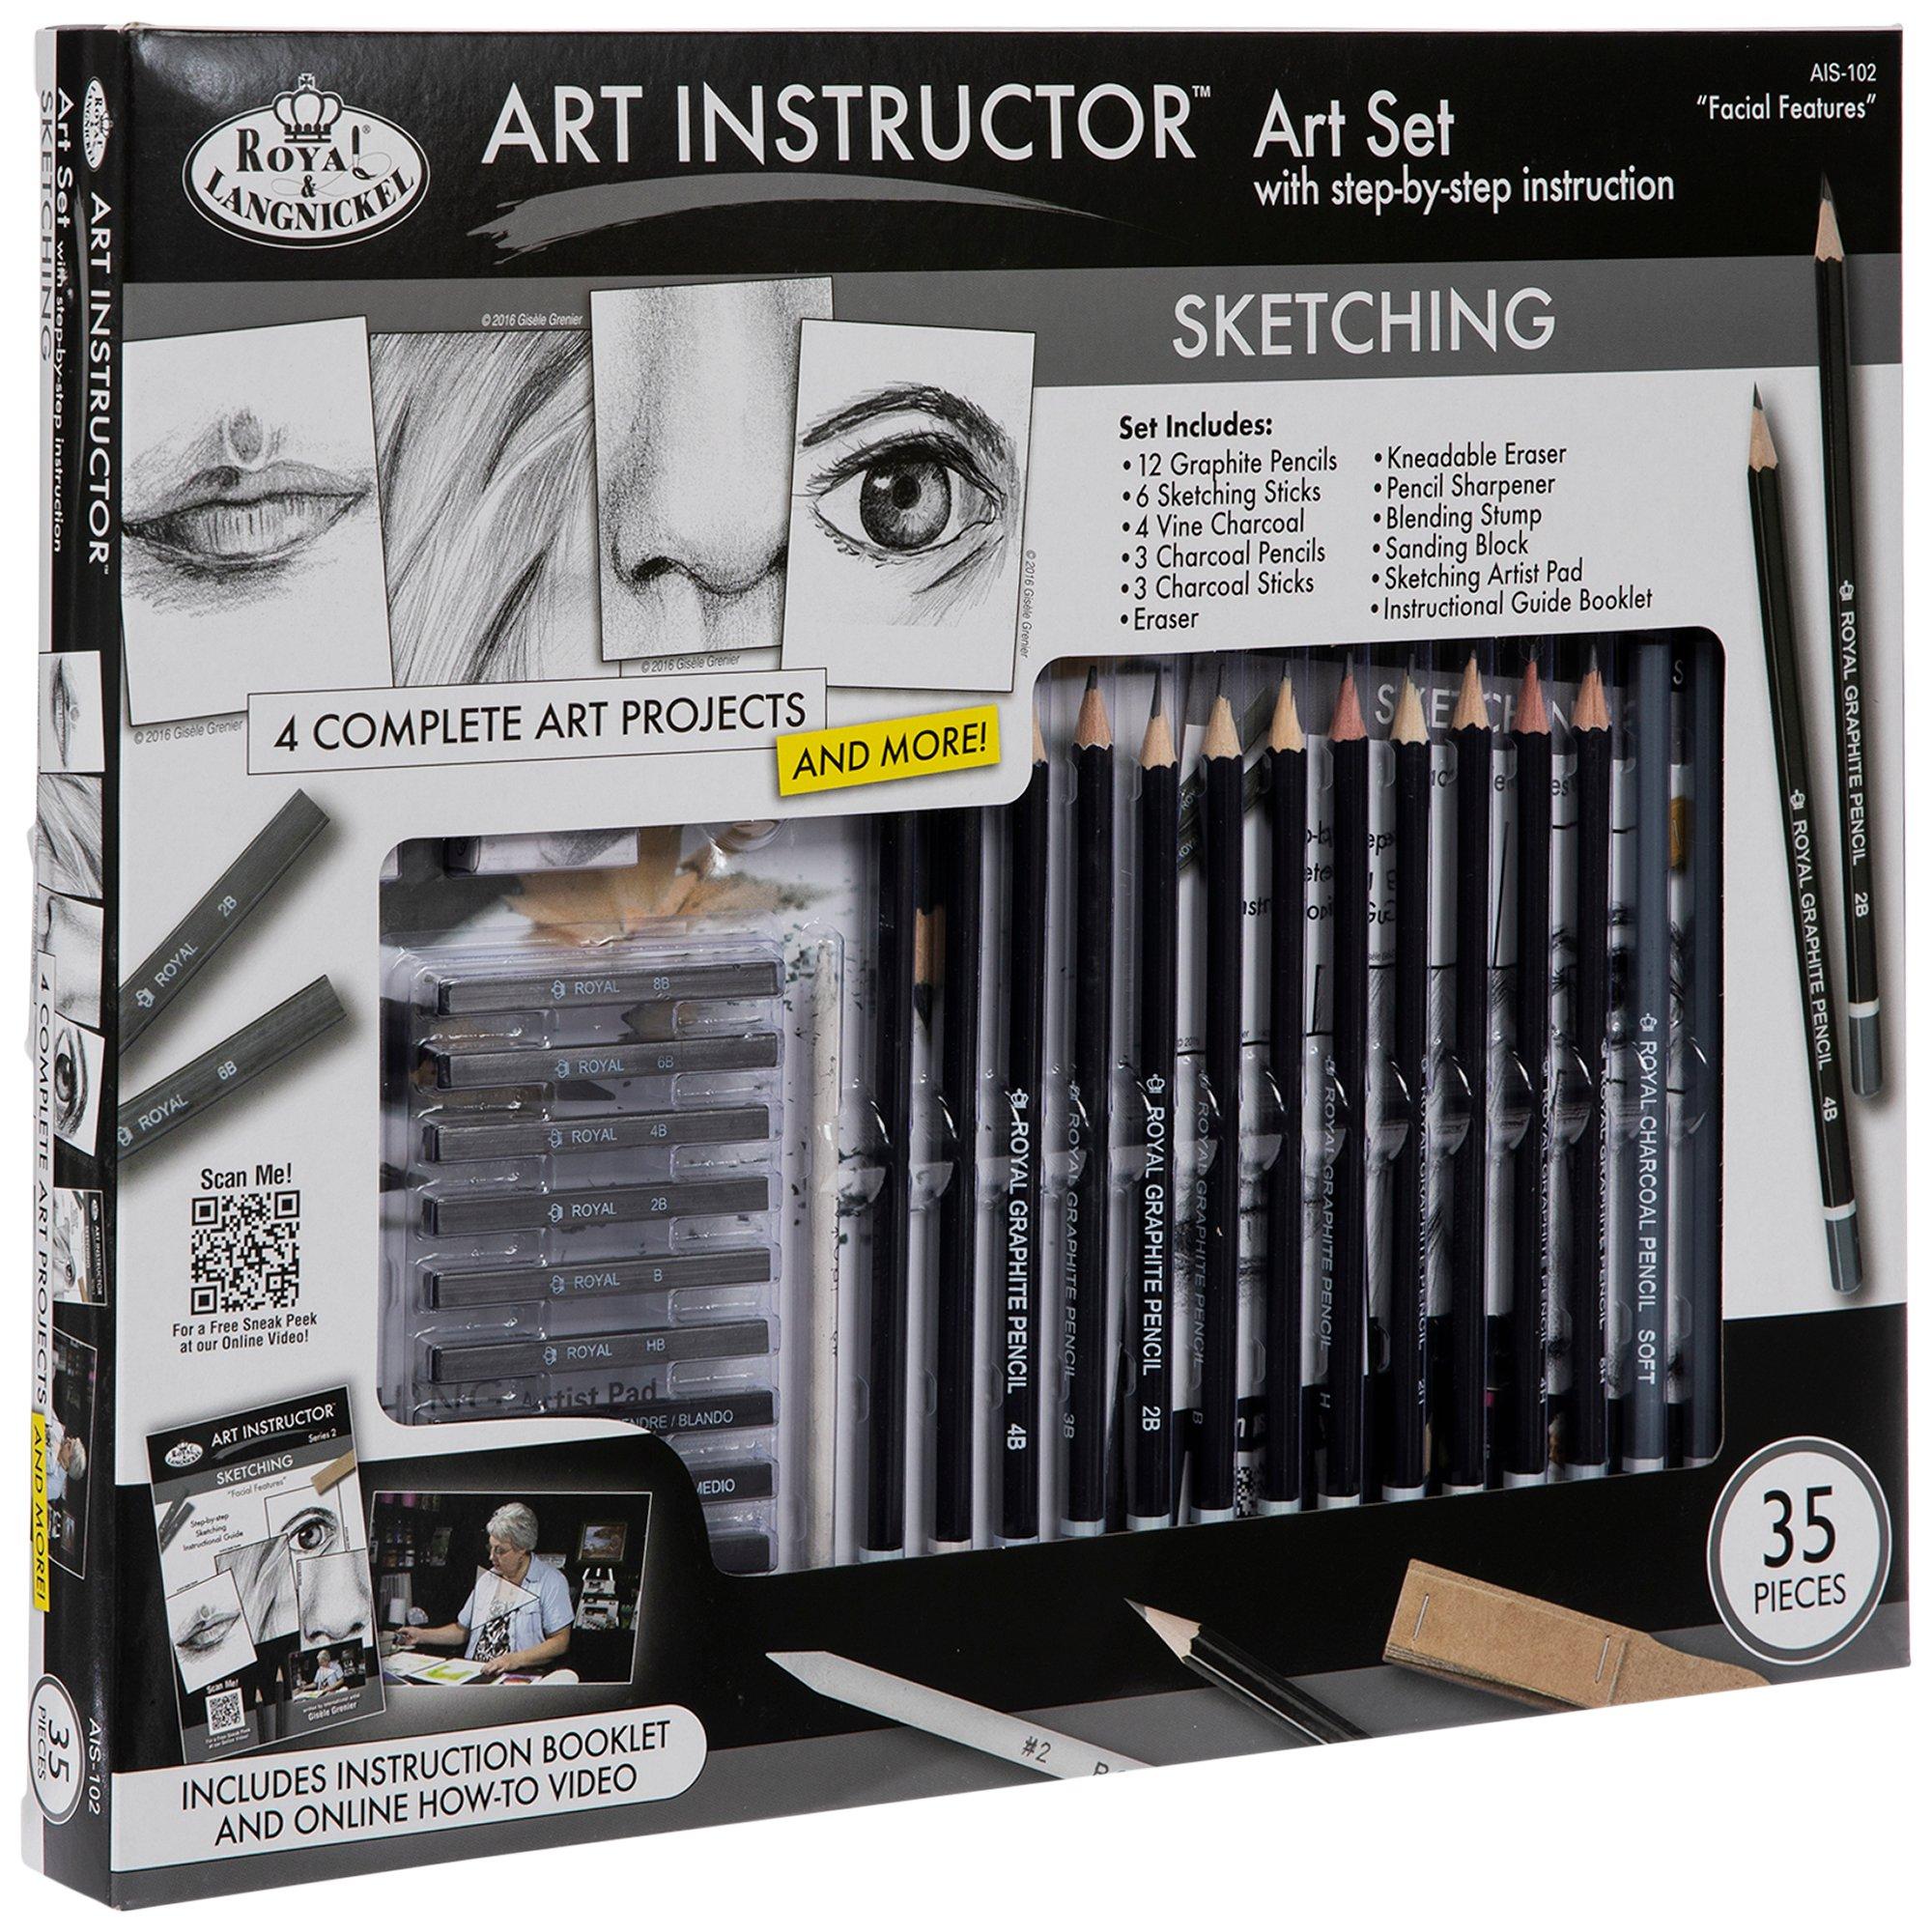 Premium Sketching Pencils & Accessories, Hobby Lobby